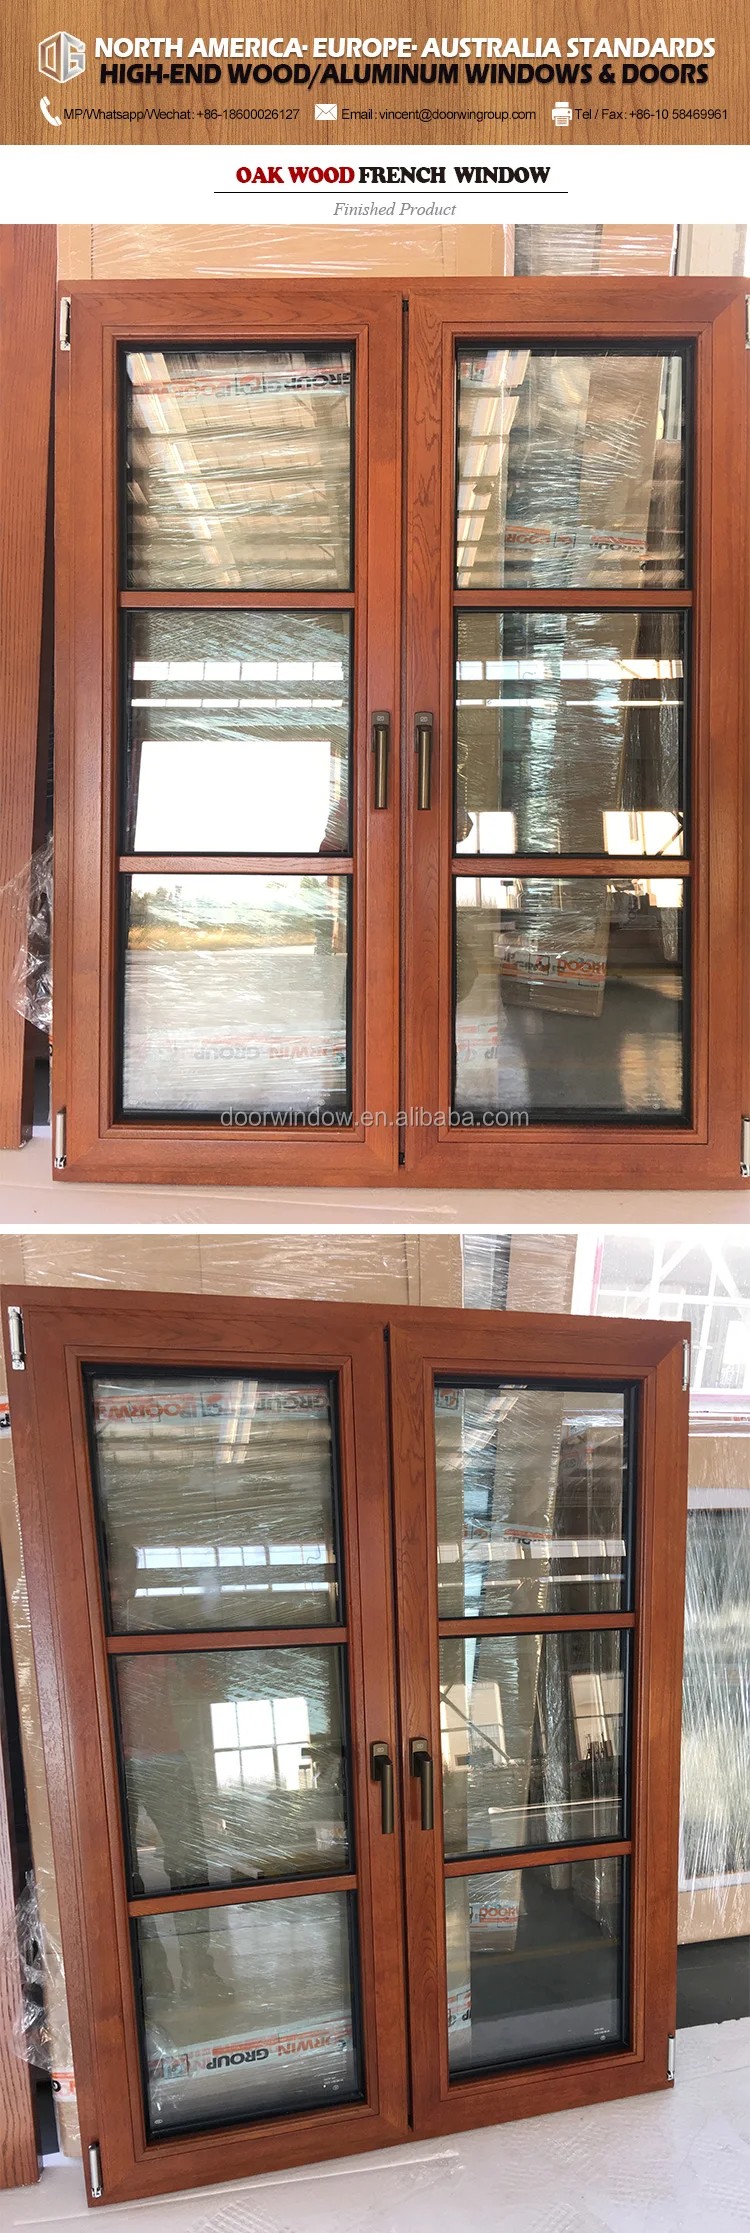 Hot Sale double pane window inserts